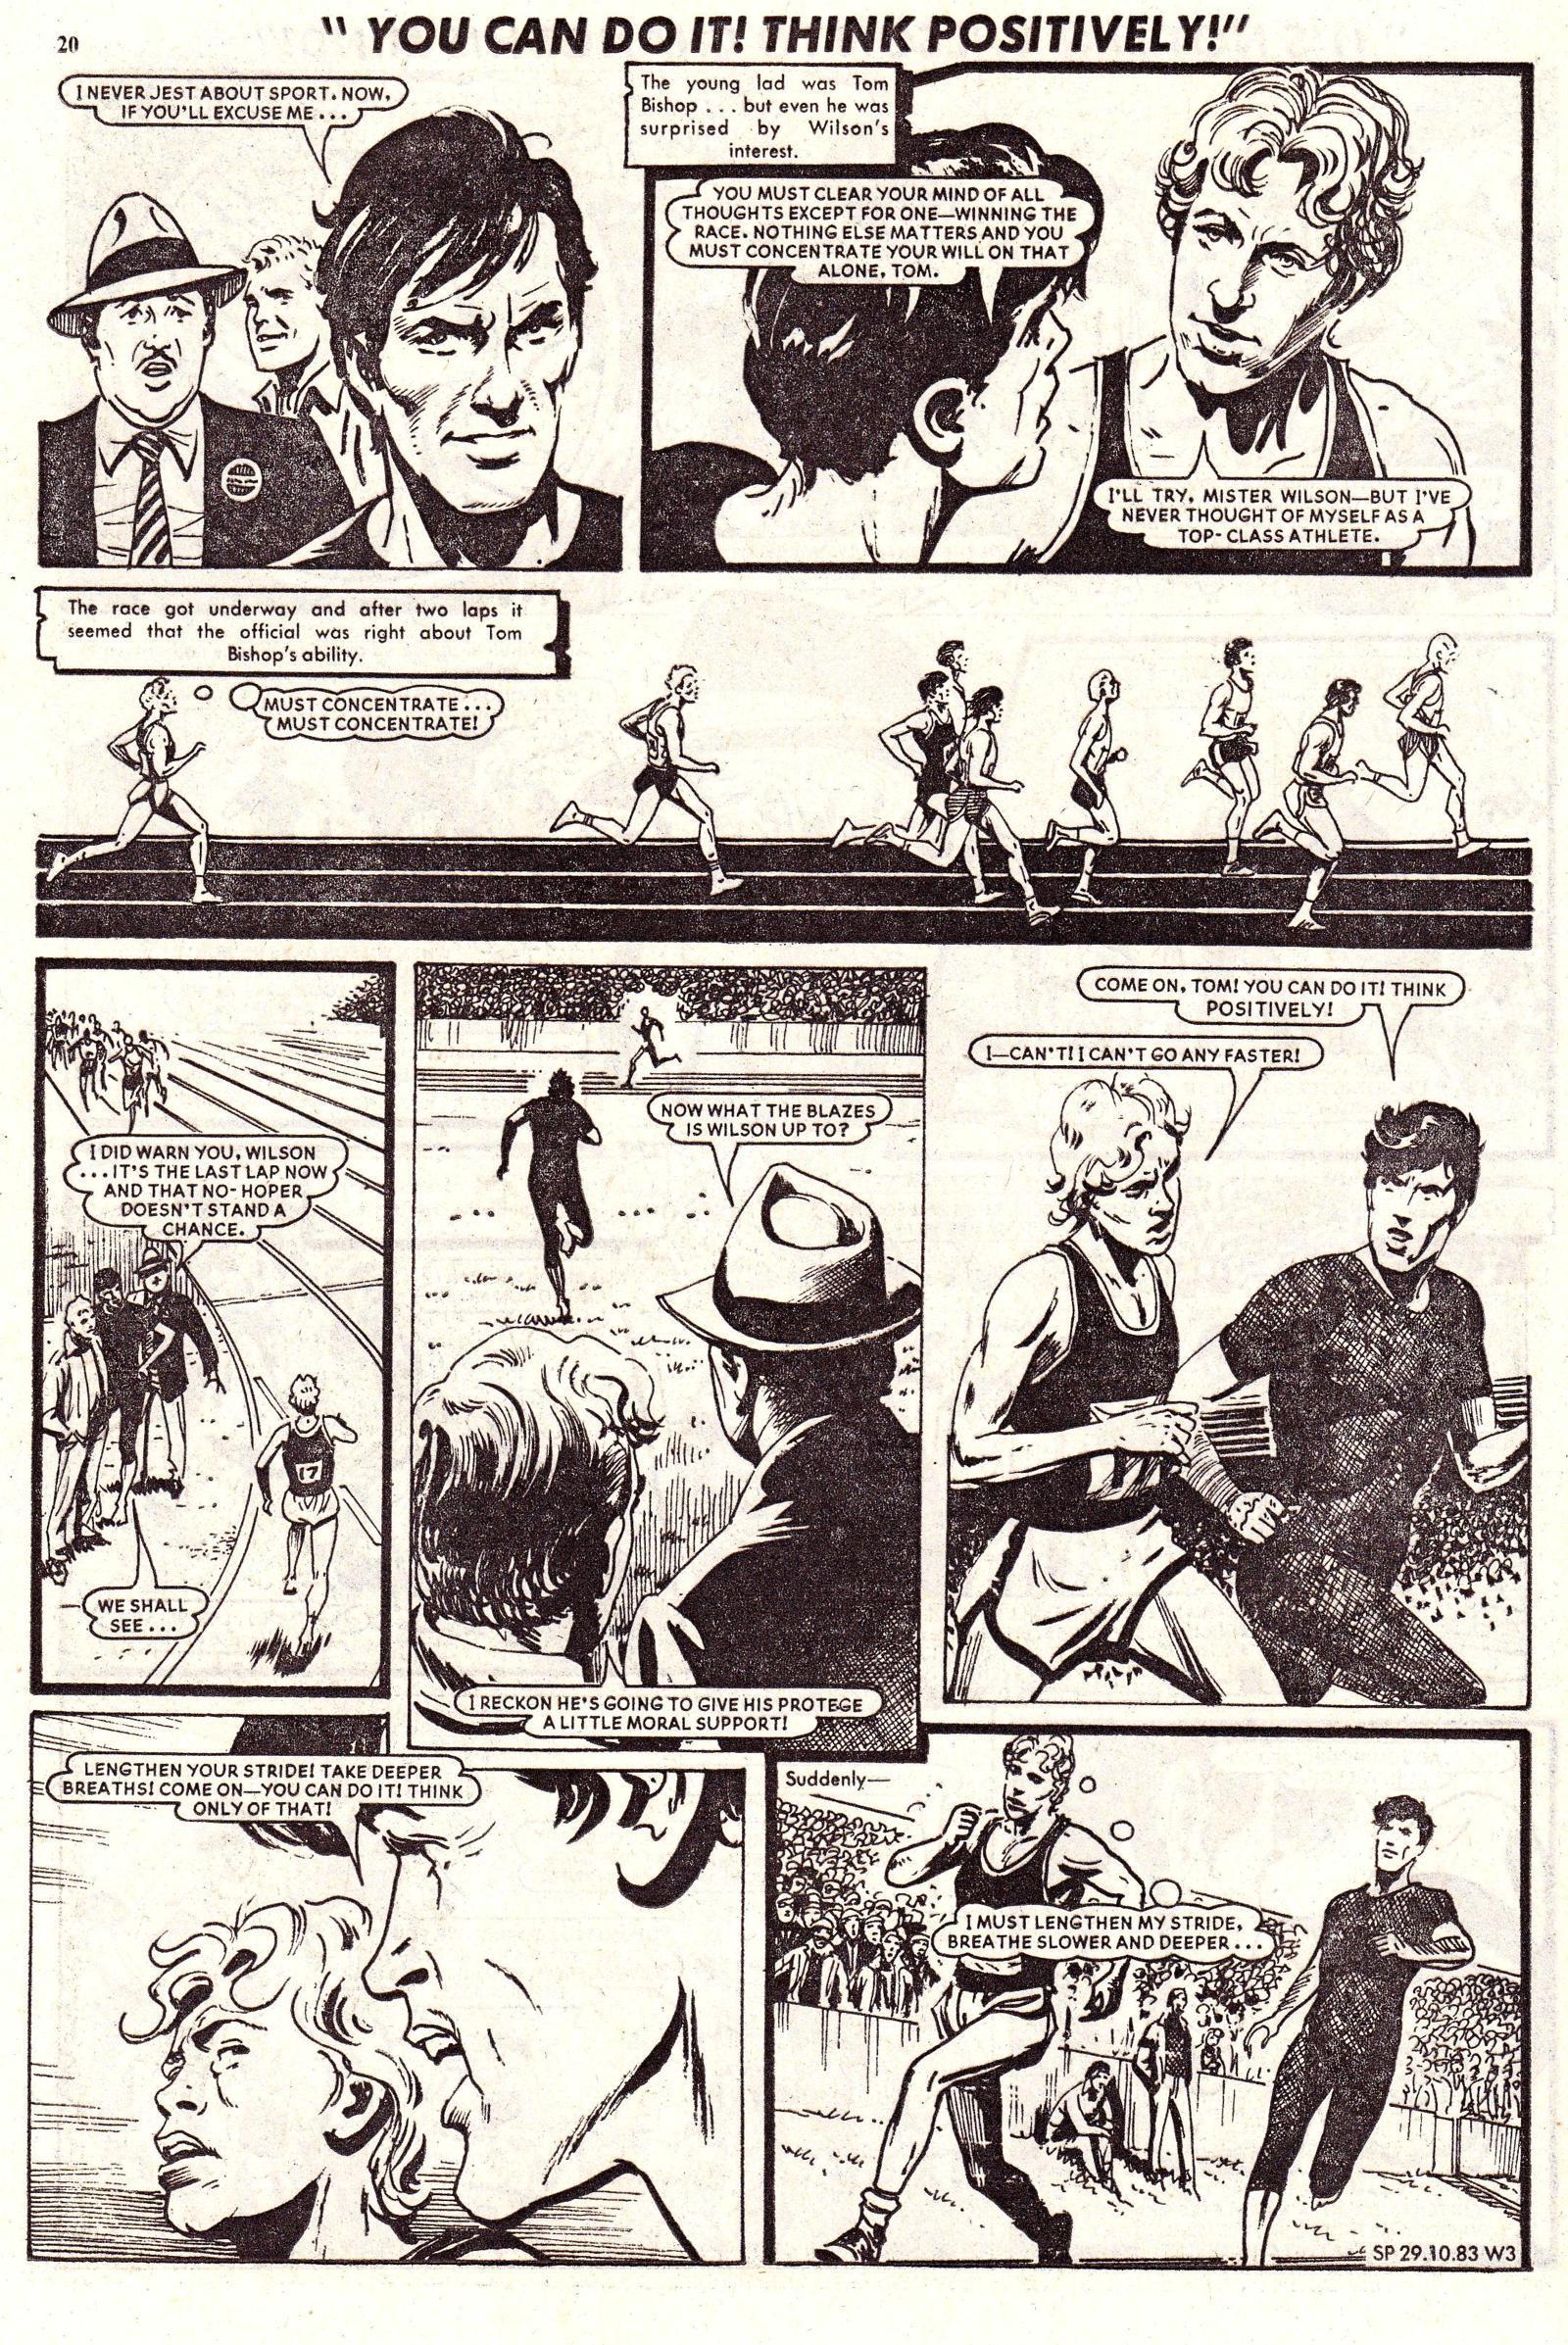 Spike 41 (1983) - Page 20